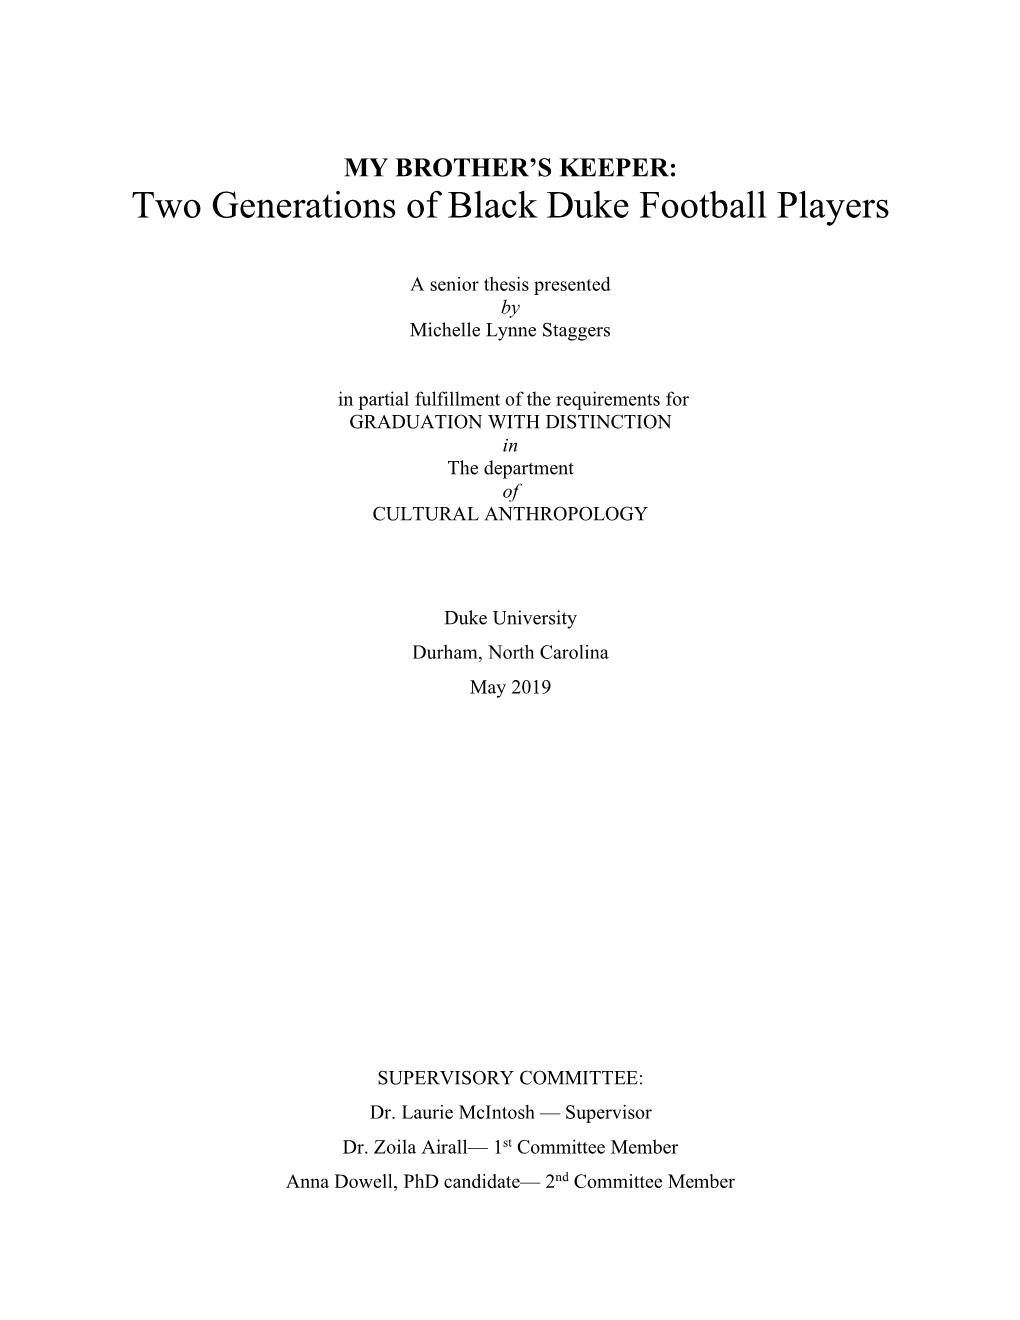 Two Generations of Black Duke Football Players